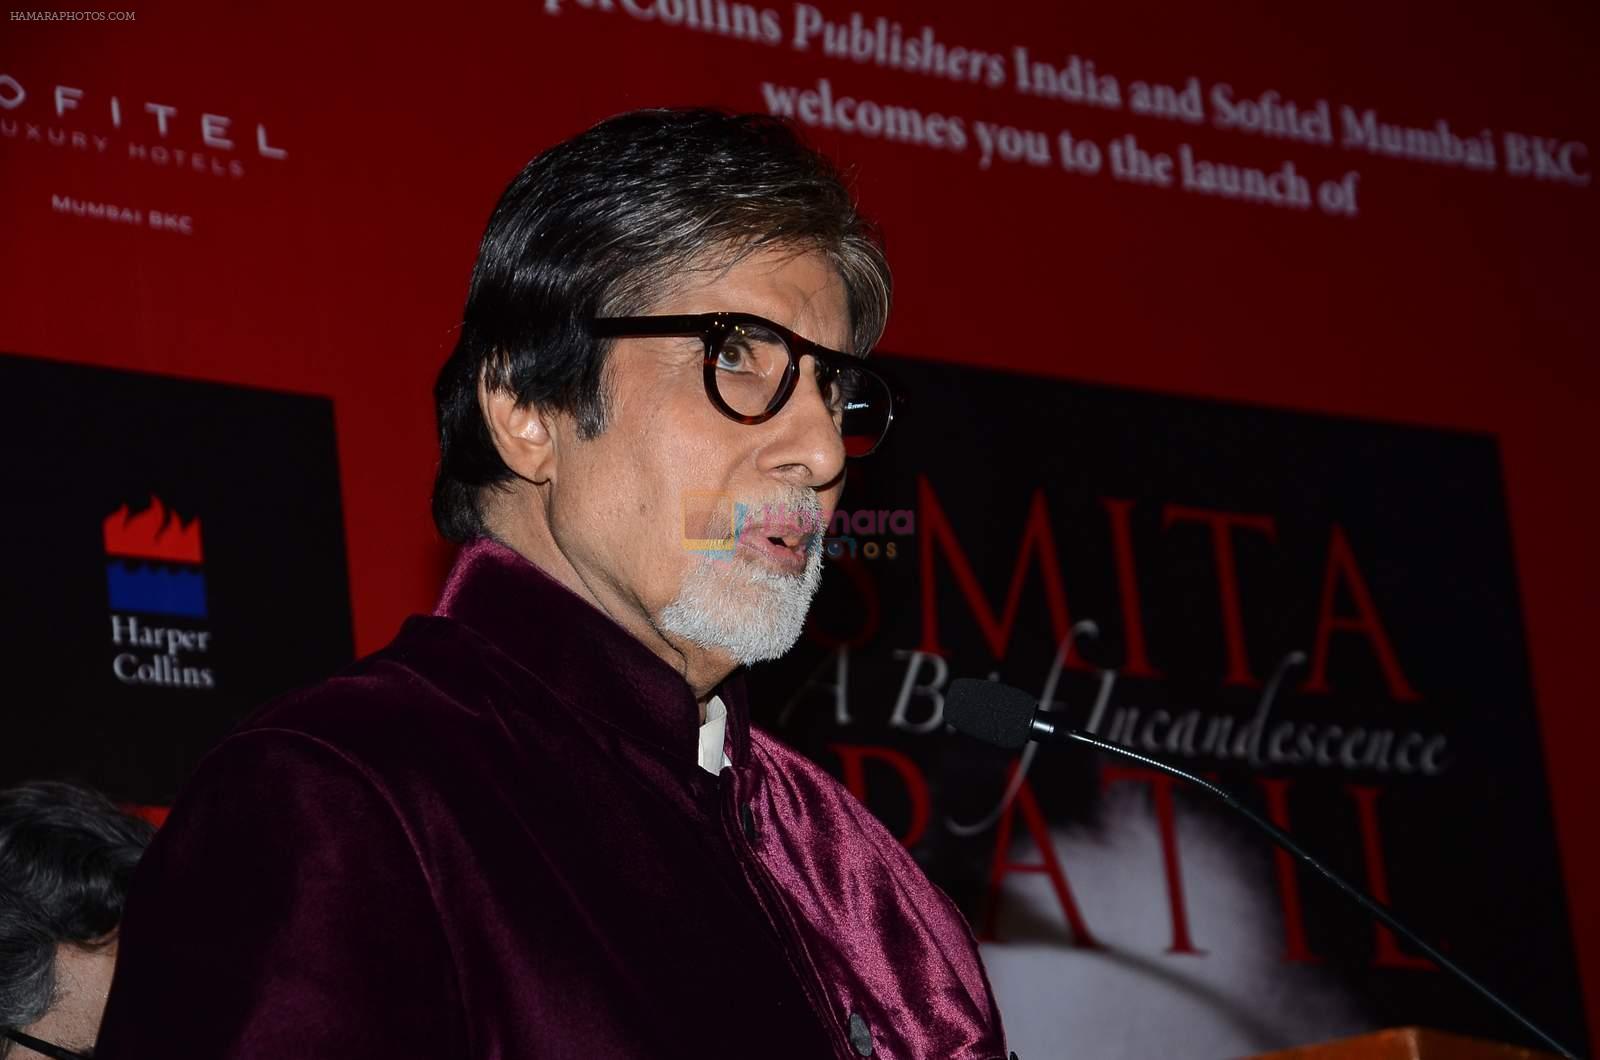 Amitabh Bachchan at Smita Patil book launch in Mumbai on 17th Oct 2015